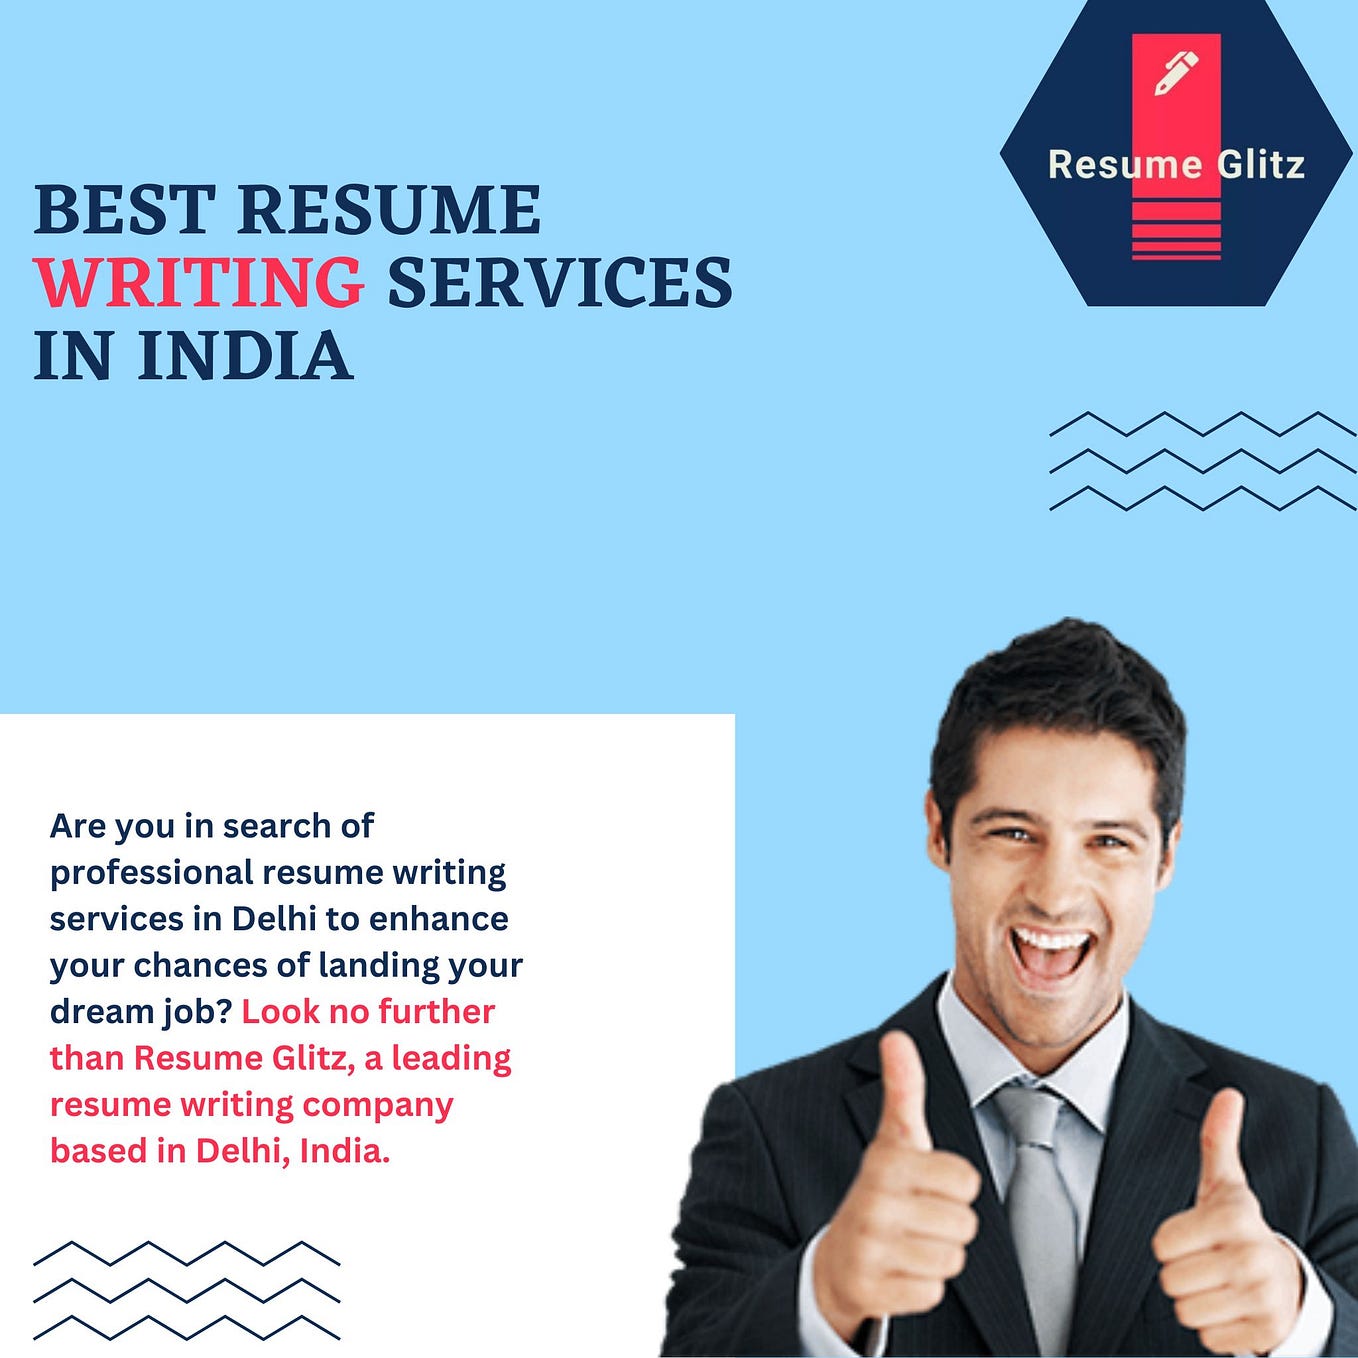 linkedin resume writing services india